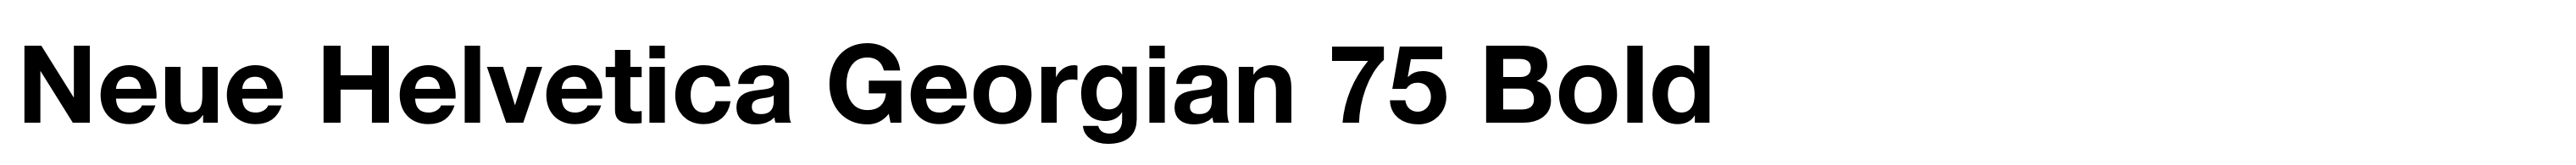 Neue Helvetica Georgian 75 Bold